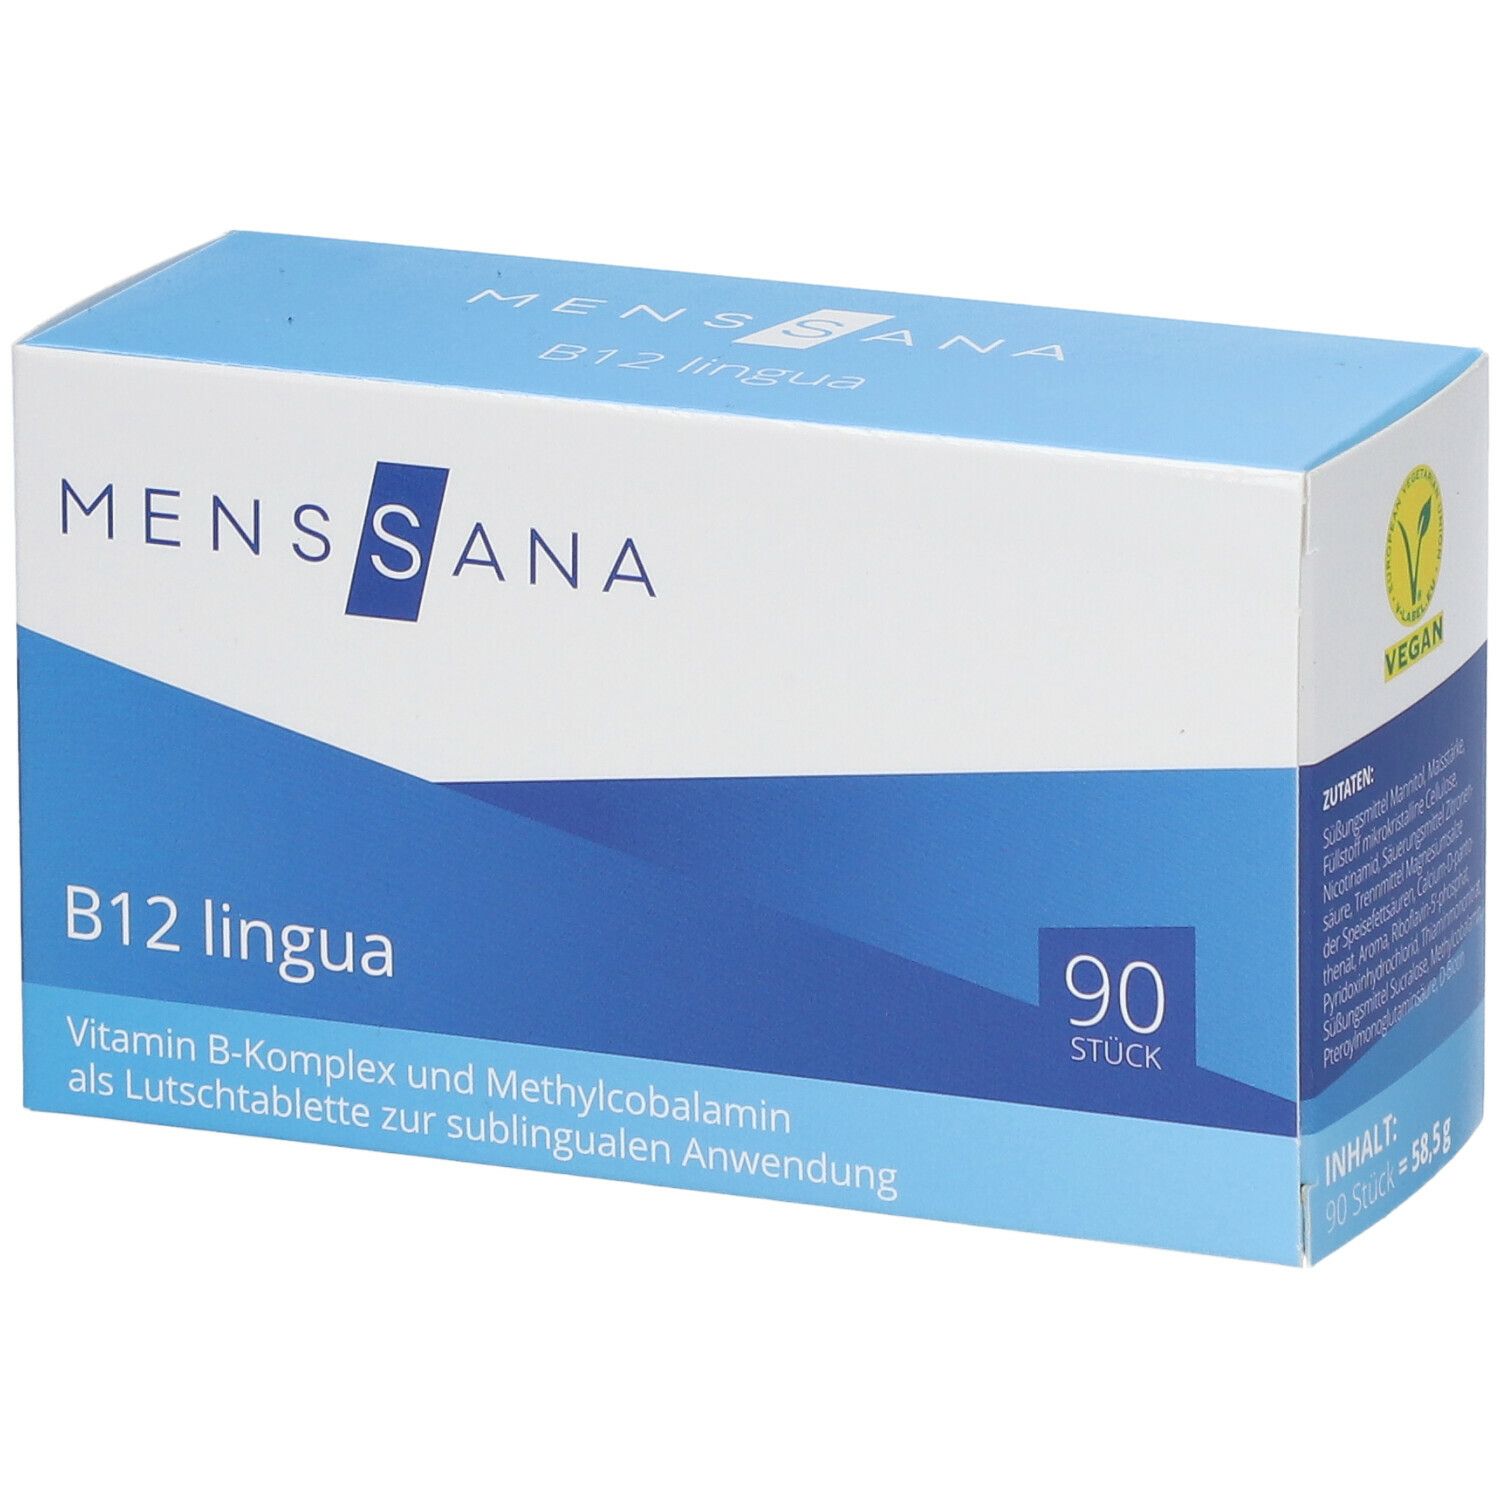 Image of MensSana B12 lingua